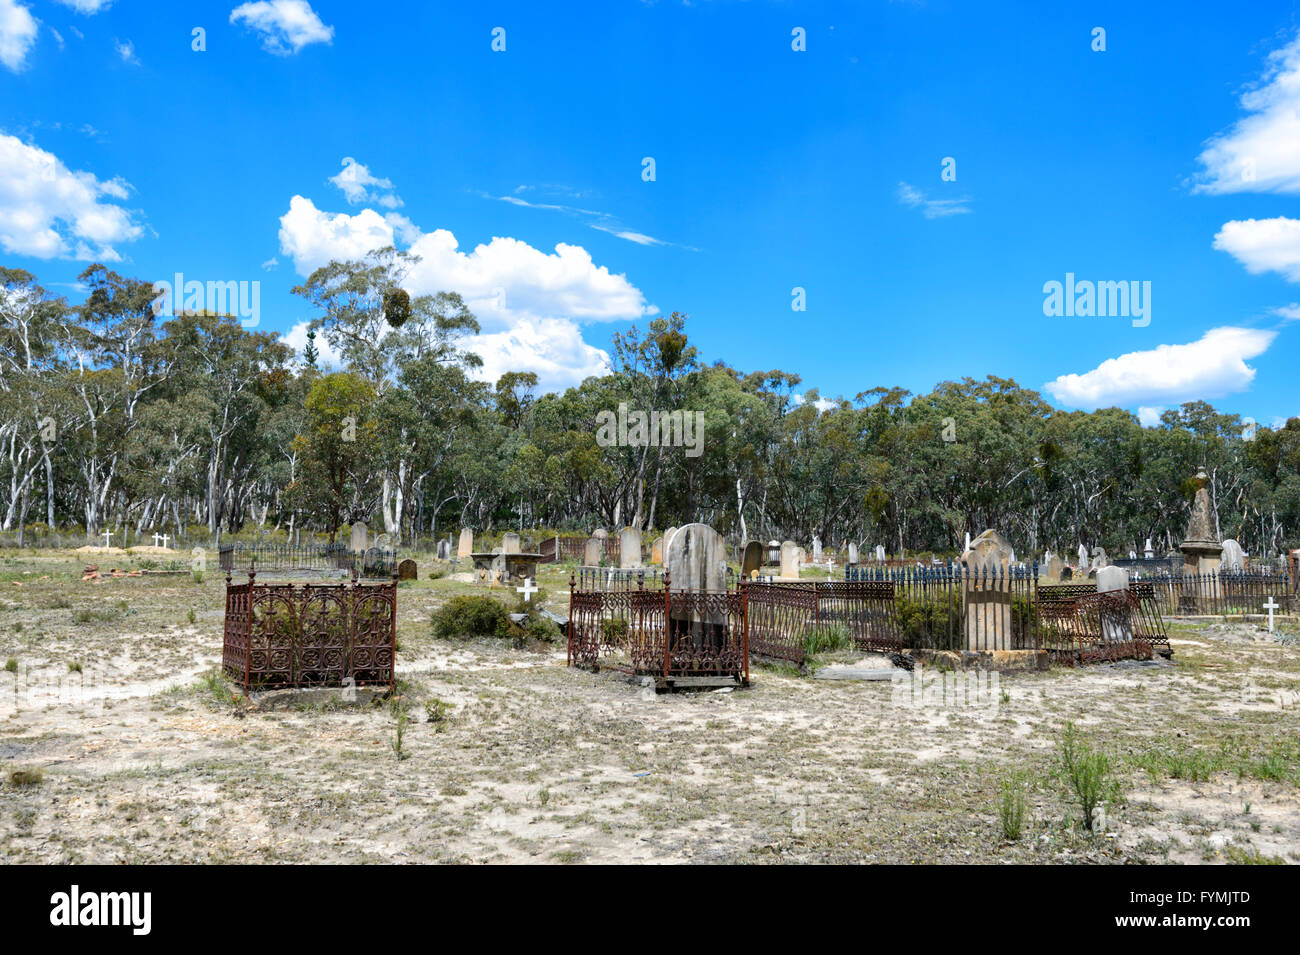 Tambaroora Friedhof, gegründet 1854, Hill End, New-South.Wales, Australien Stockfoto